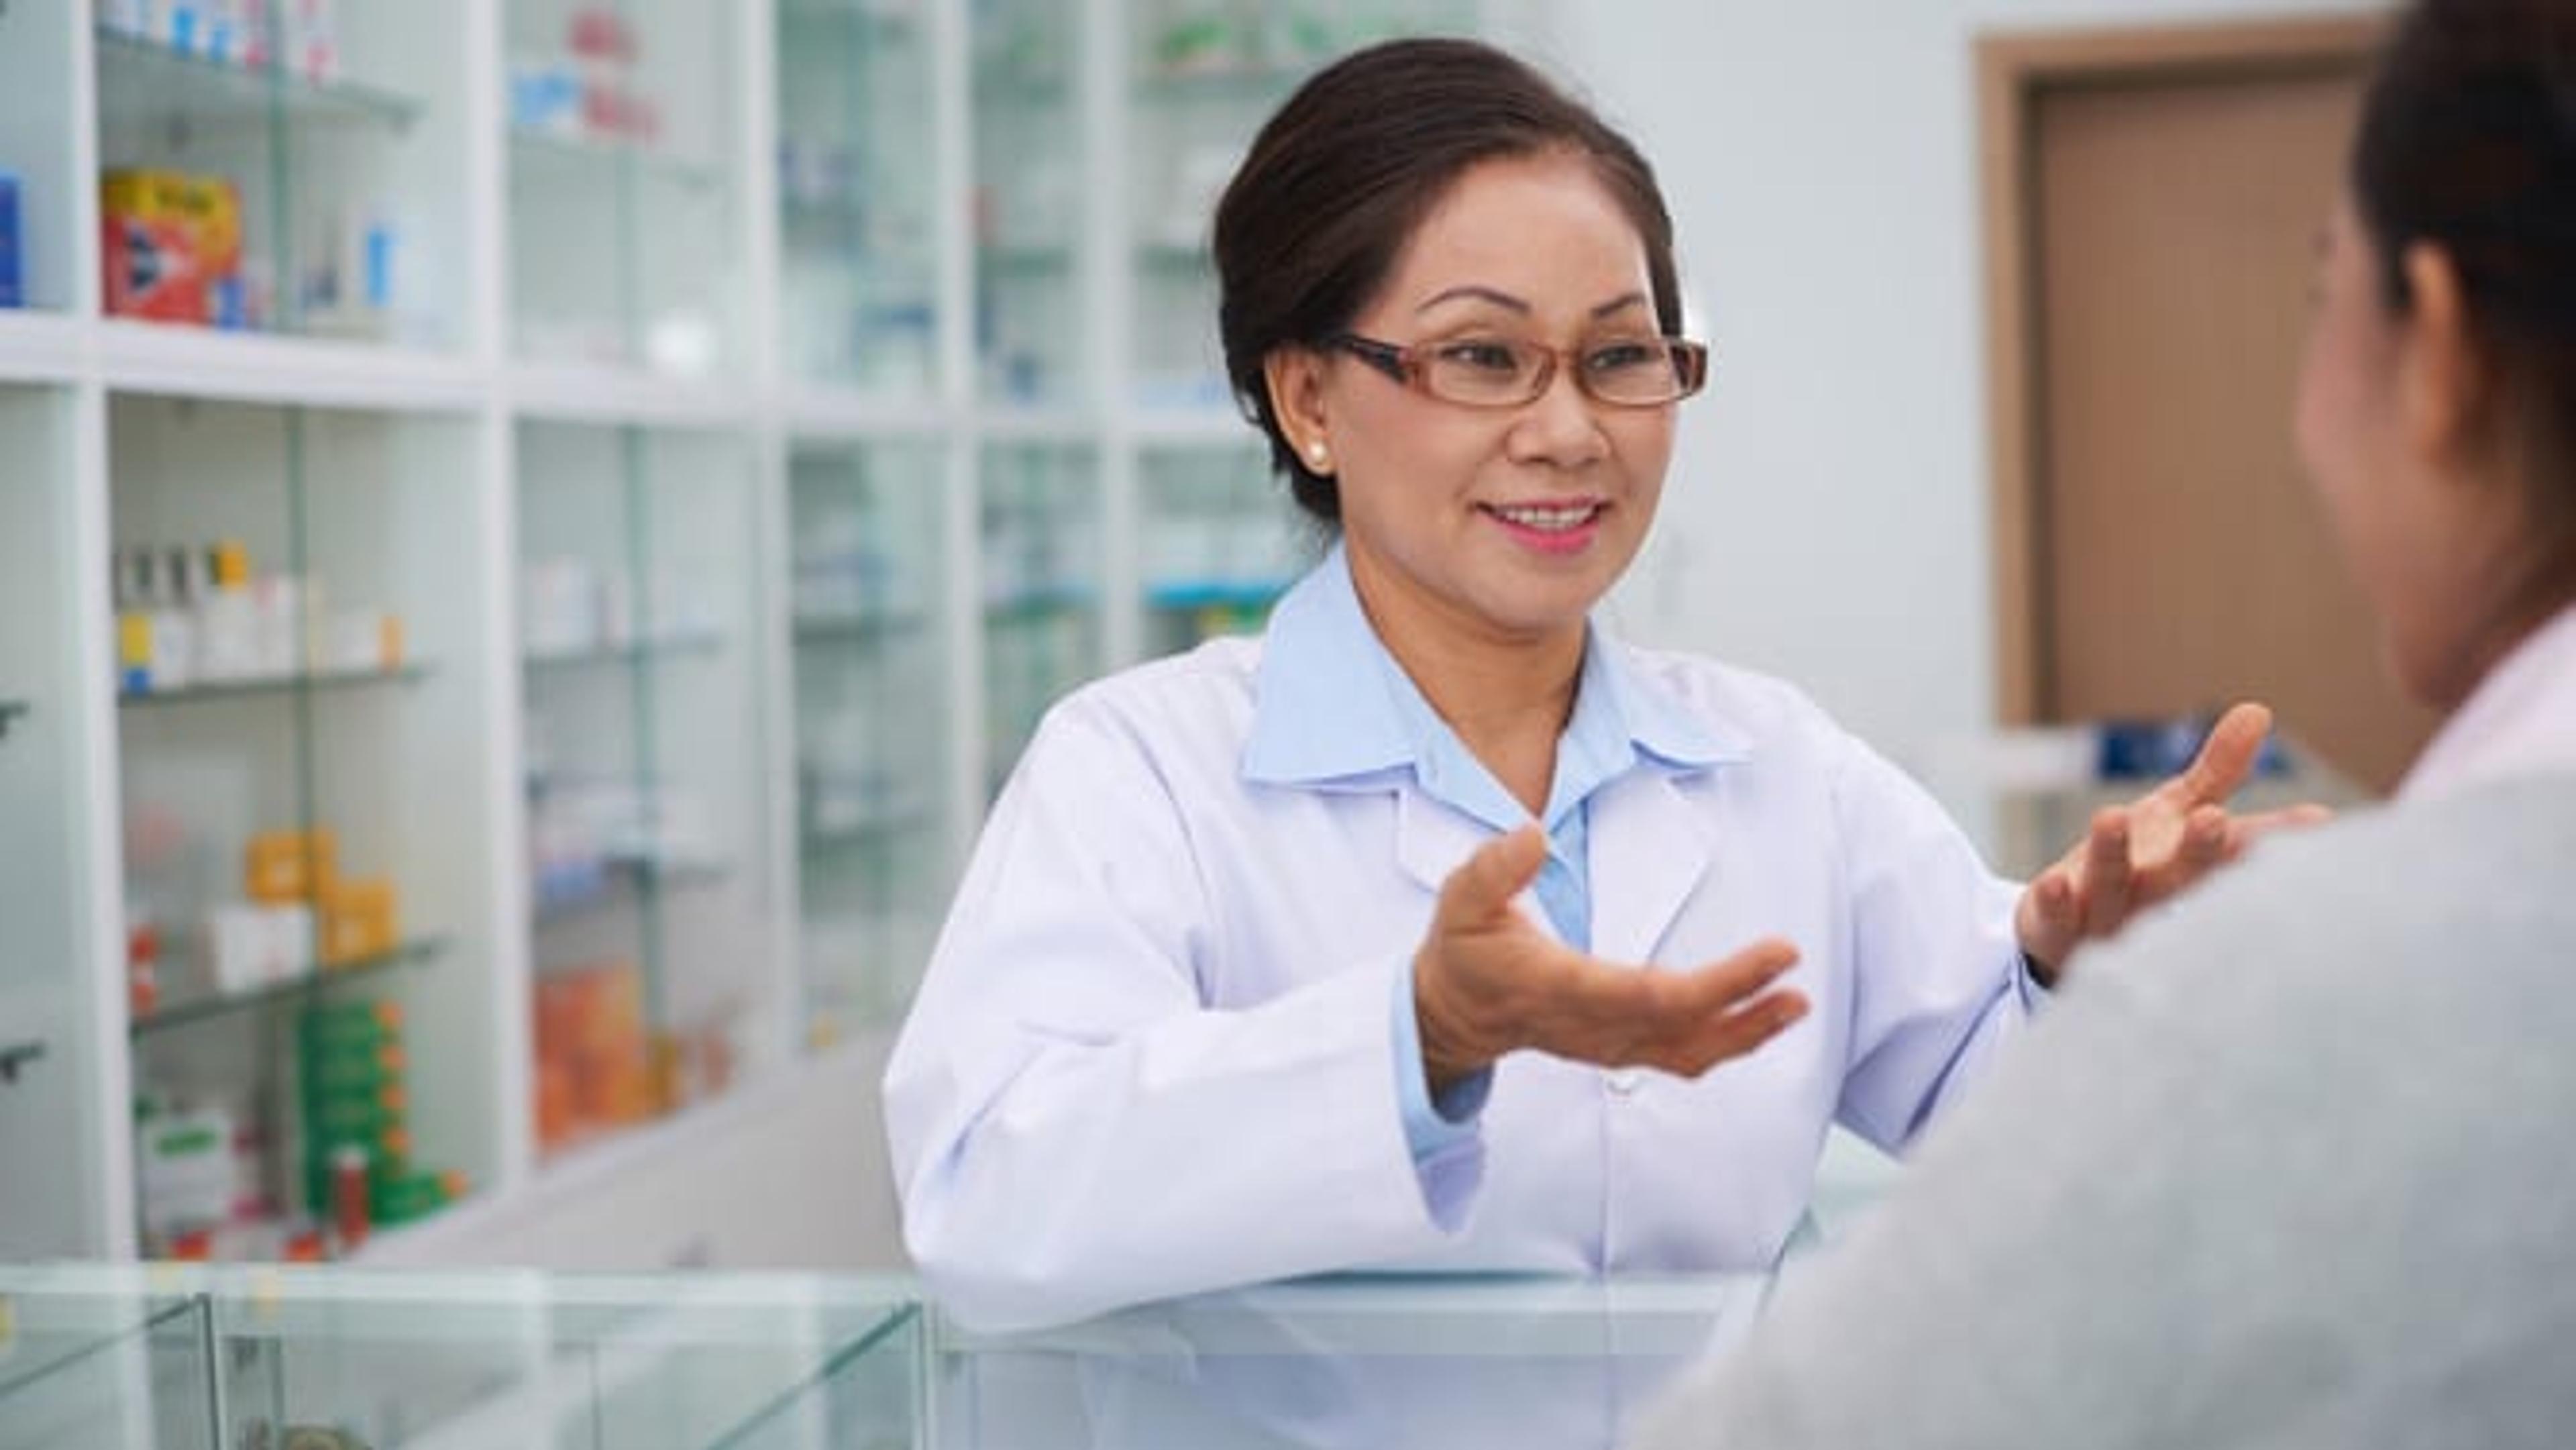 Pharmacist speaking with customer.